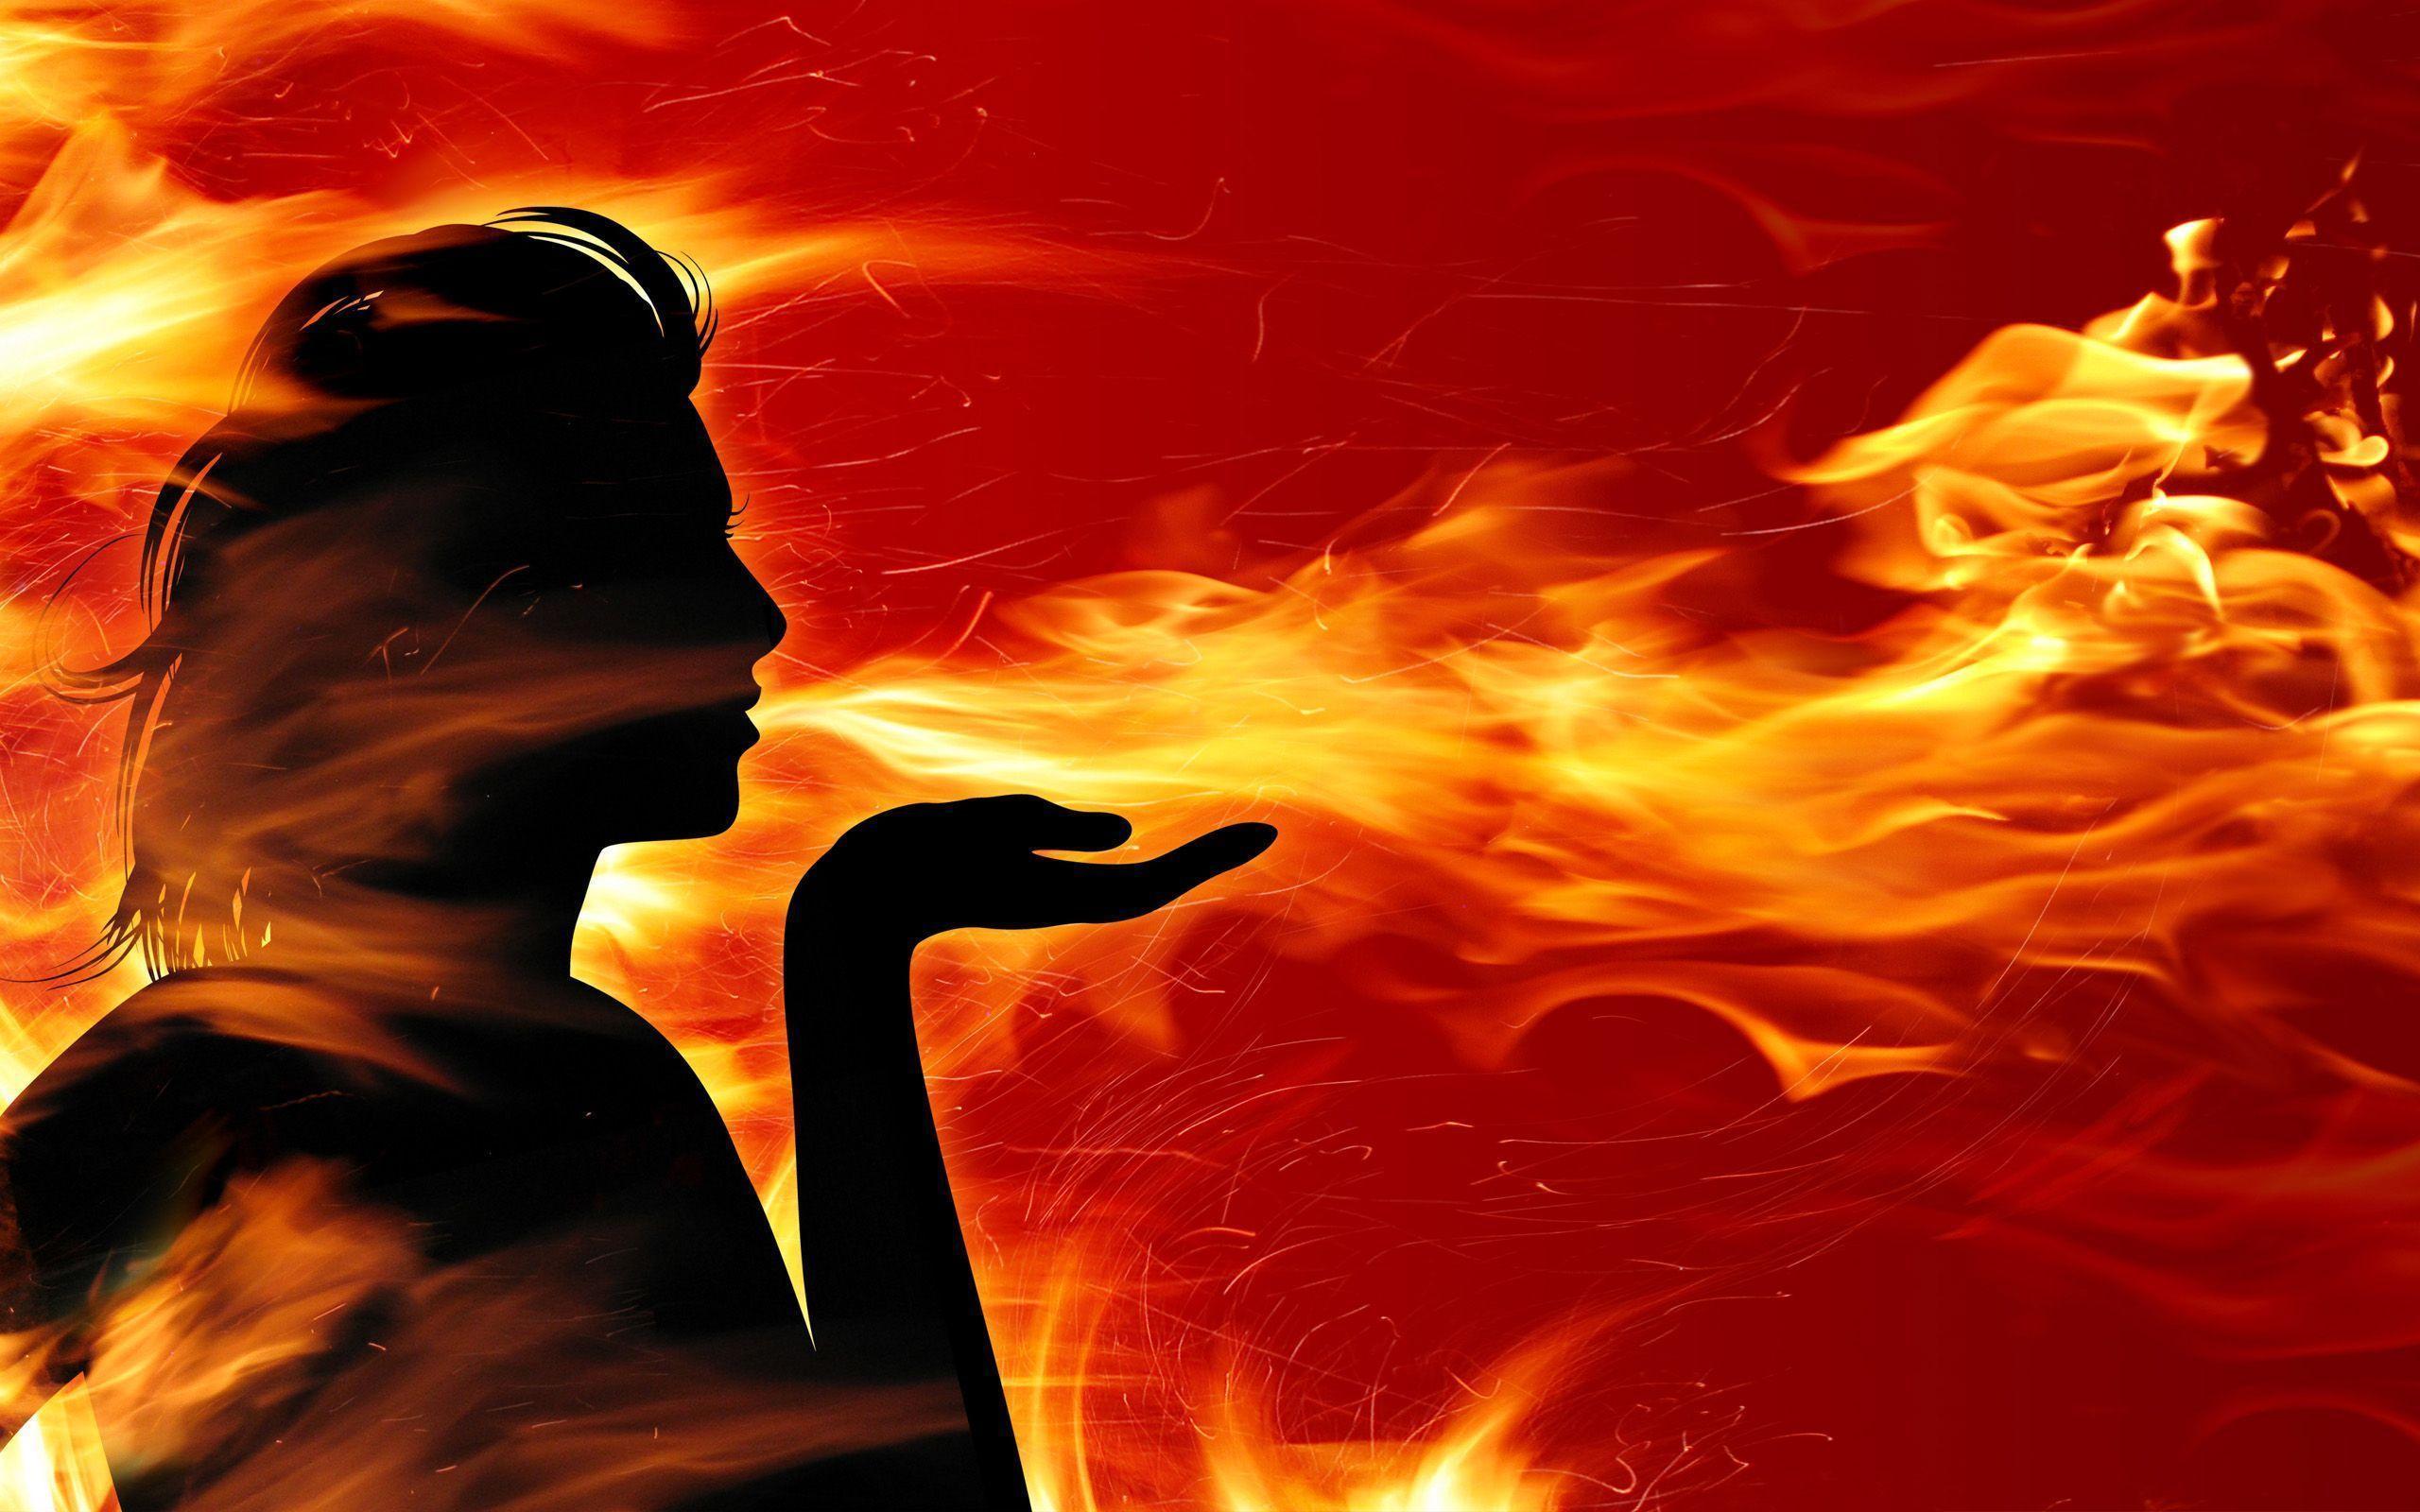 WOMEN OF FIRE HD WALLPAPER , BACKGROUNDS, HD, IMAGES, SEARCH WALLPAPER